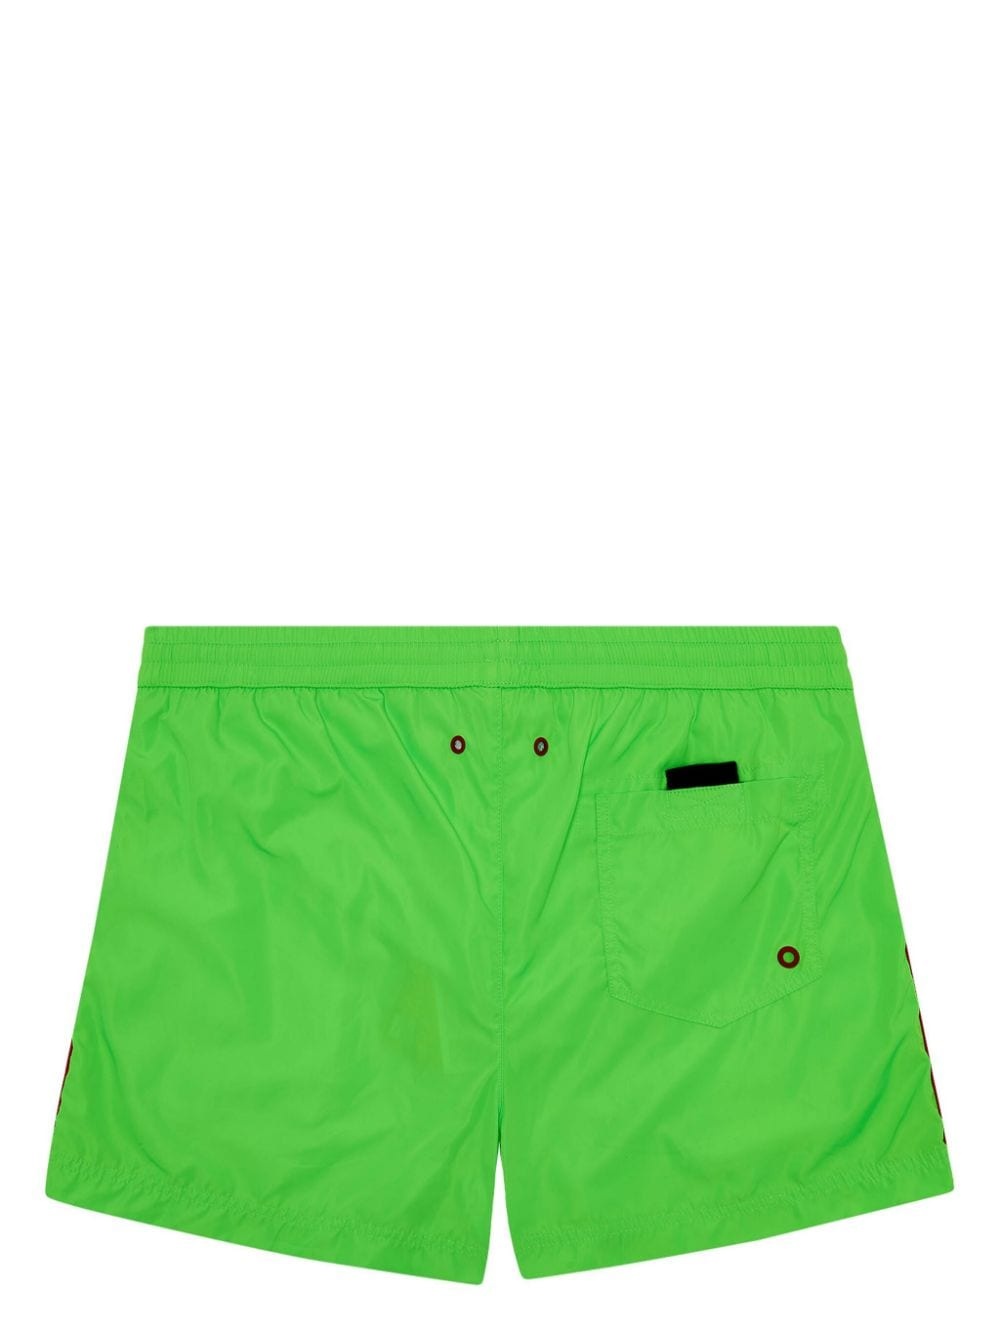 Bmbx-Ken swim shorts - 2